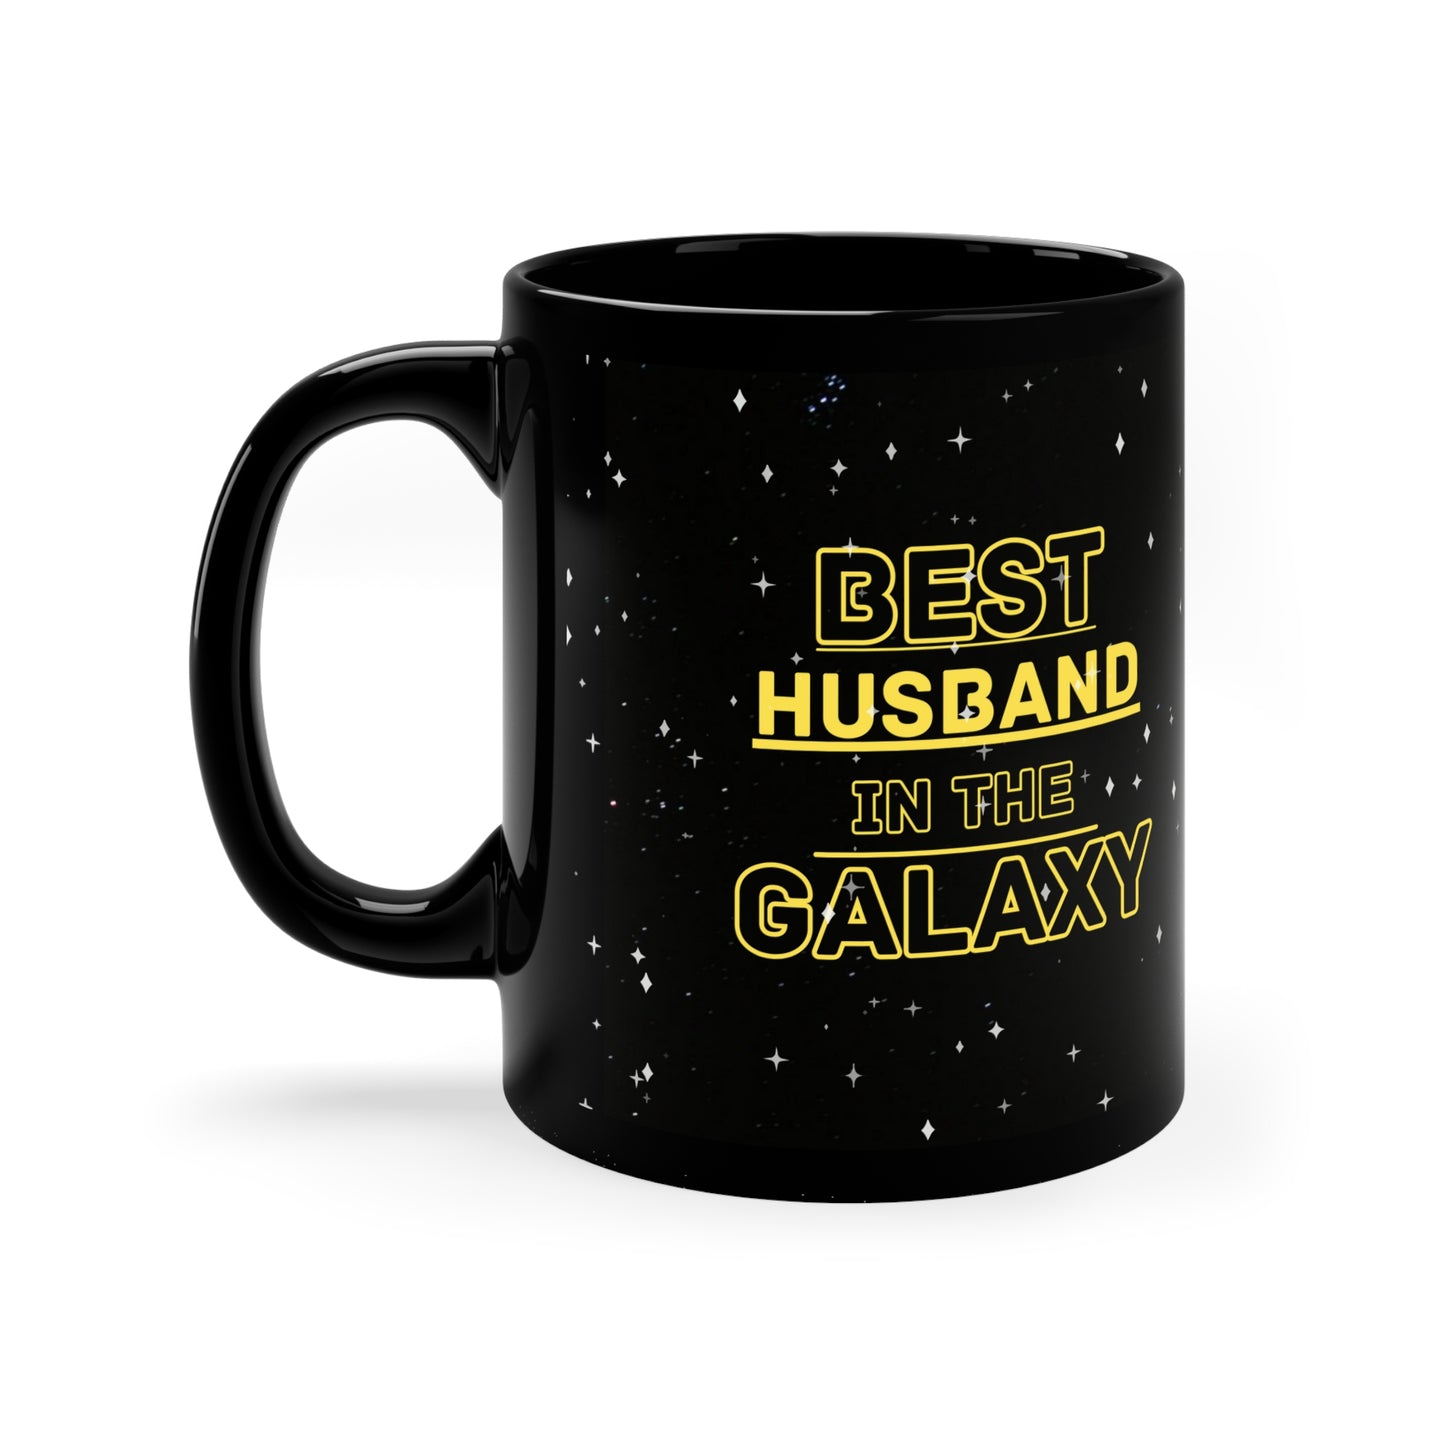 Galactic Love Mug: Husband